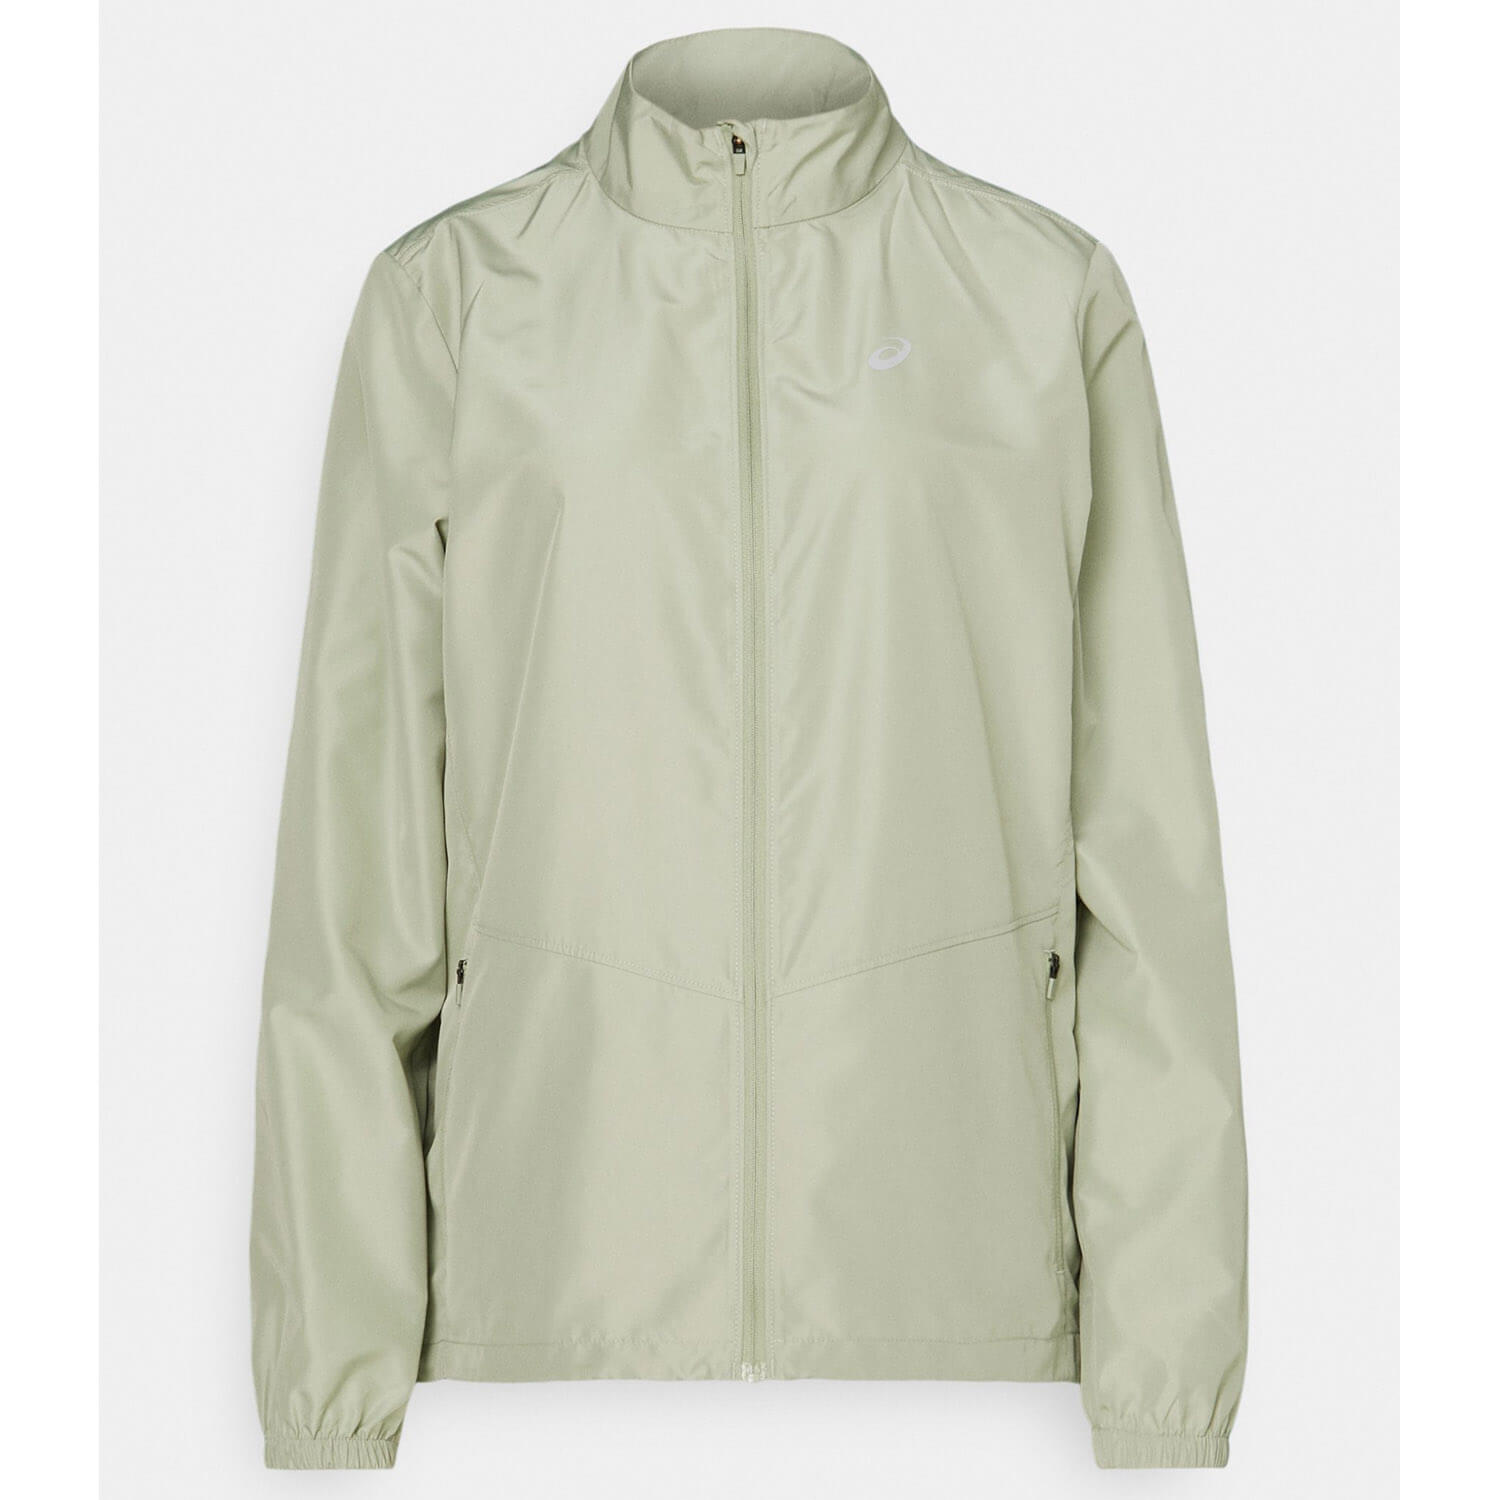 Куртка Asics Core, оливково-серый куртка для бега h